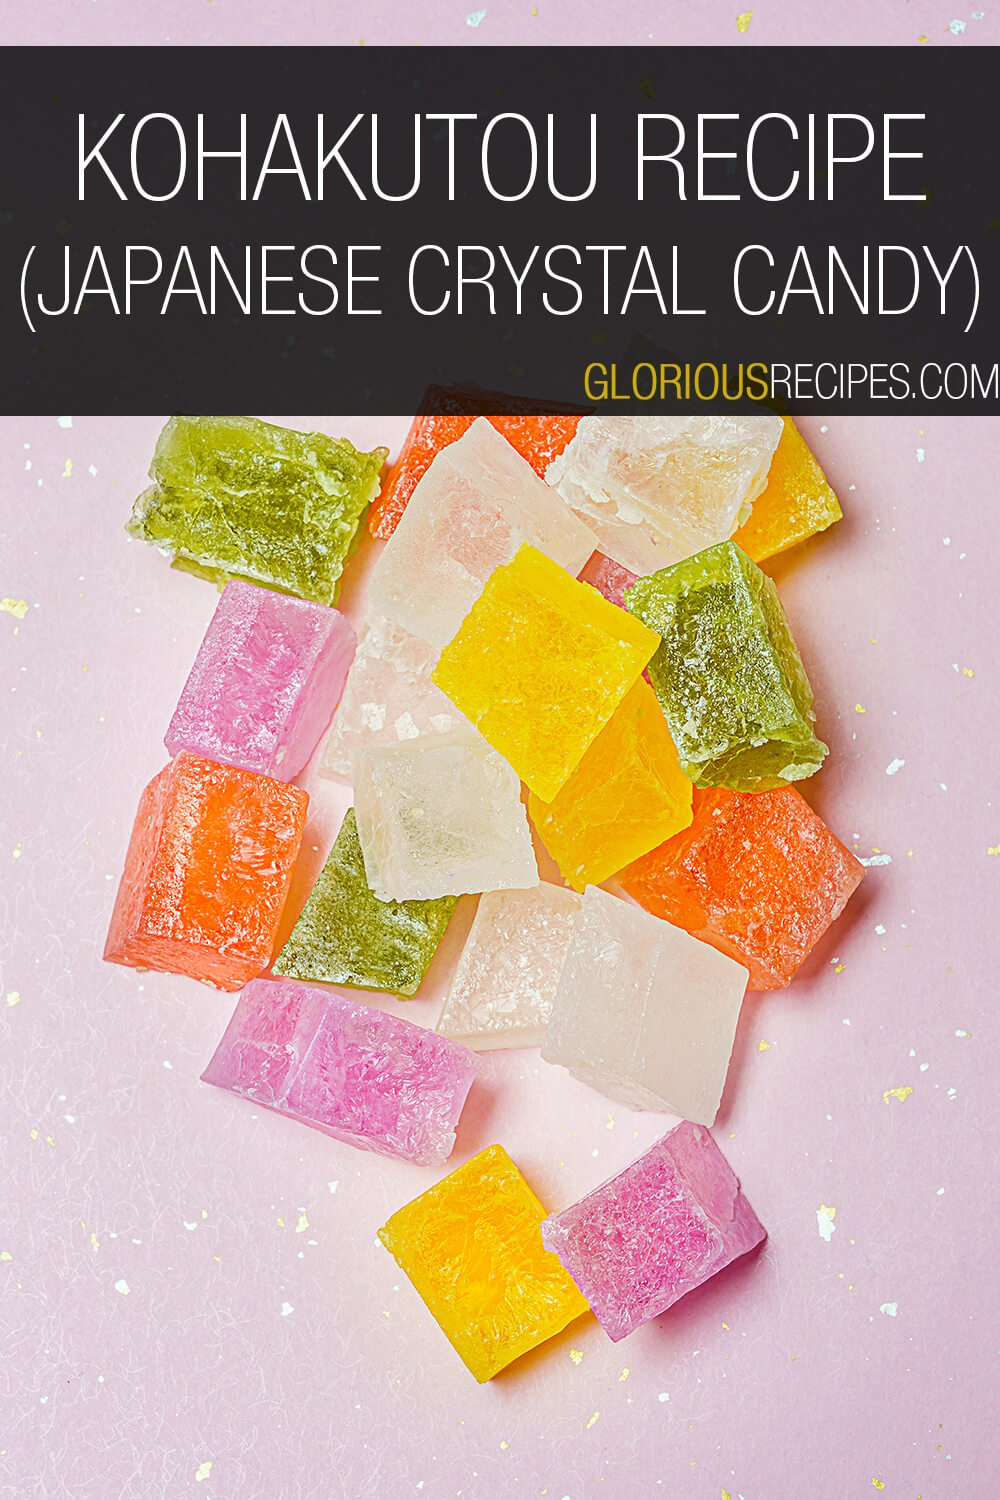 Kohakutou Recipe - Japanese Crystal Candy